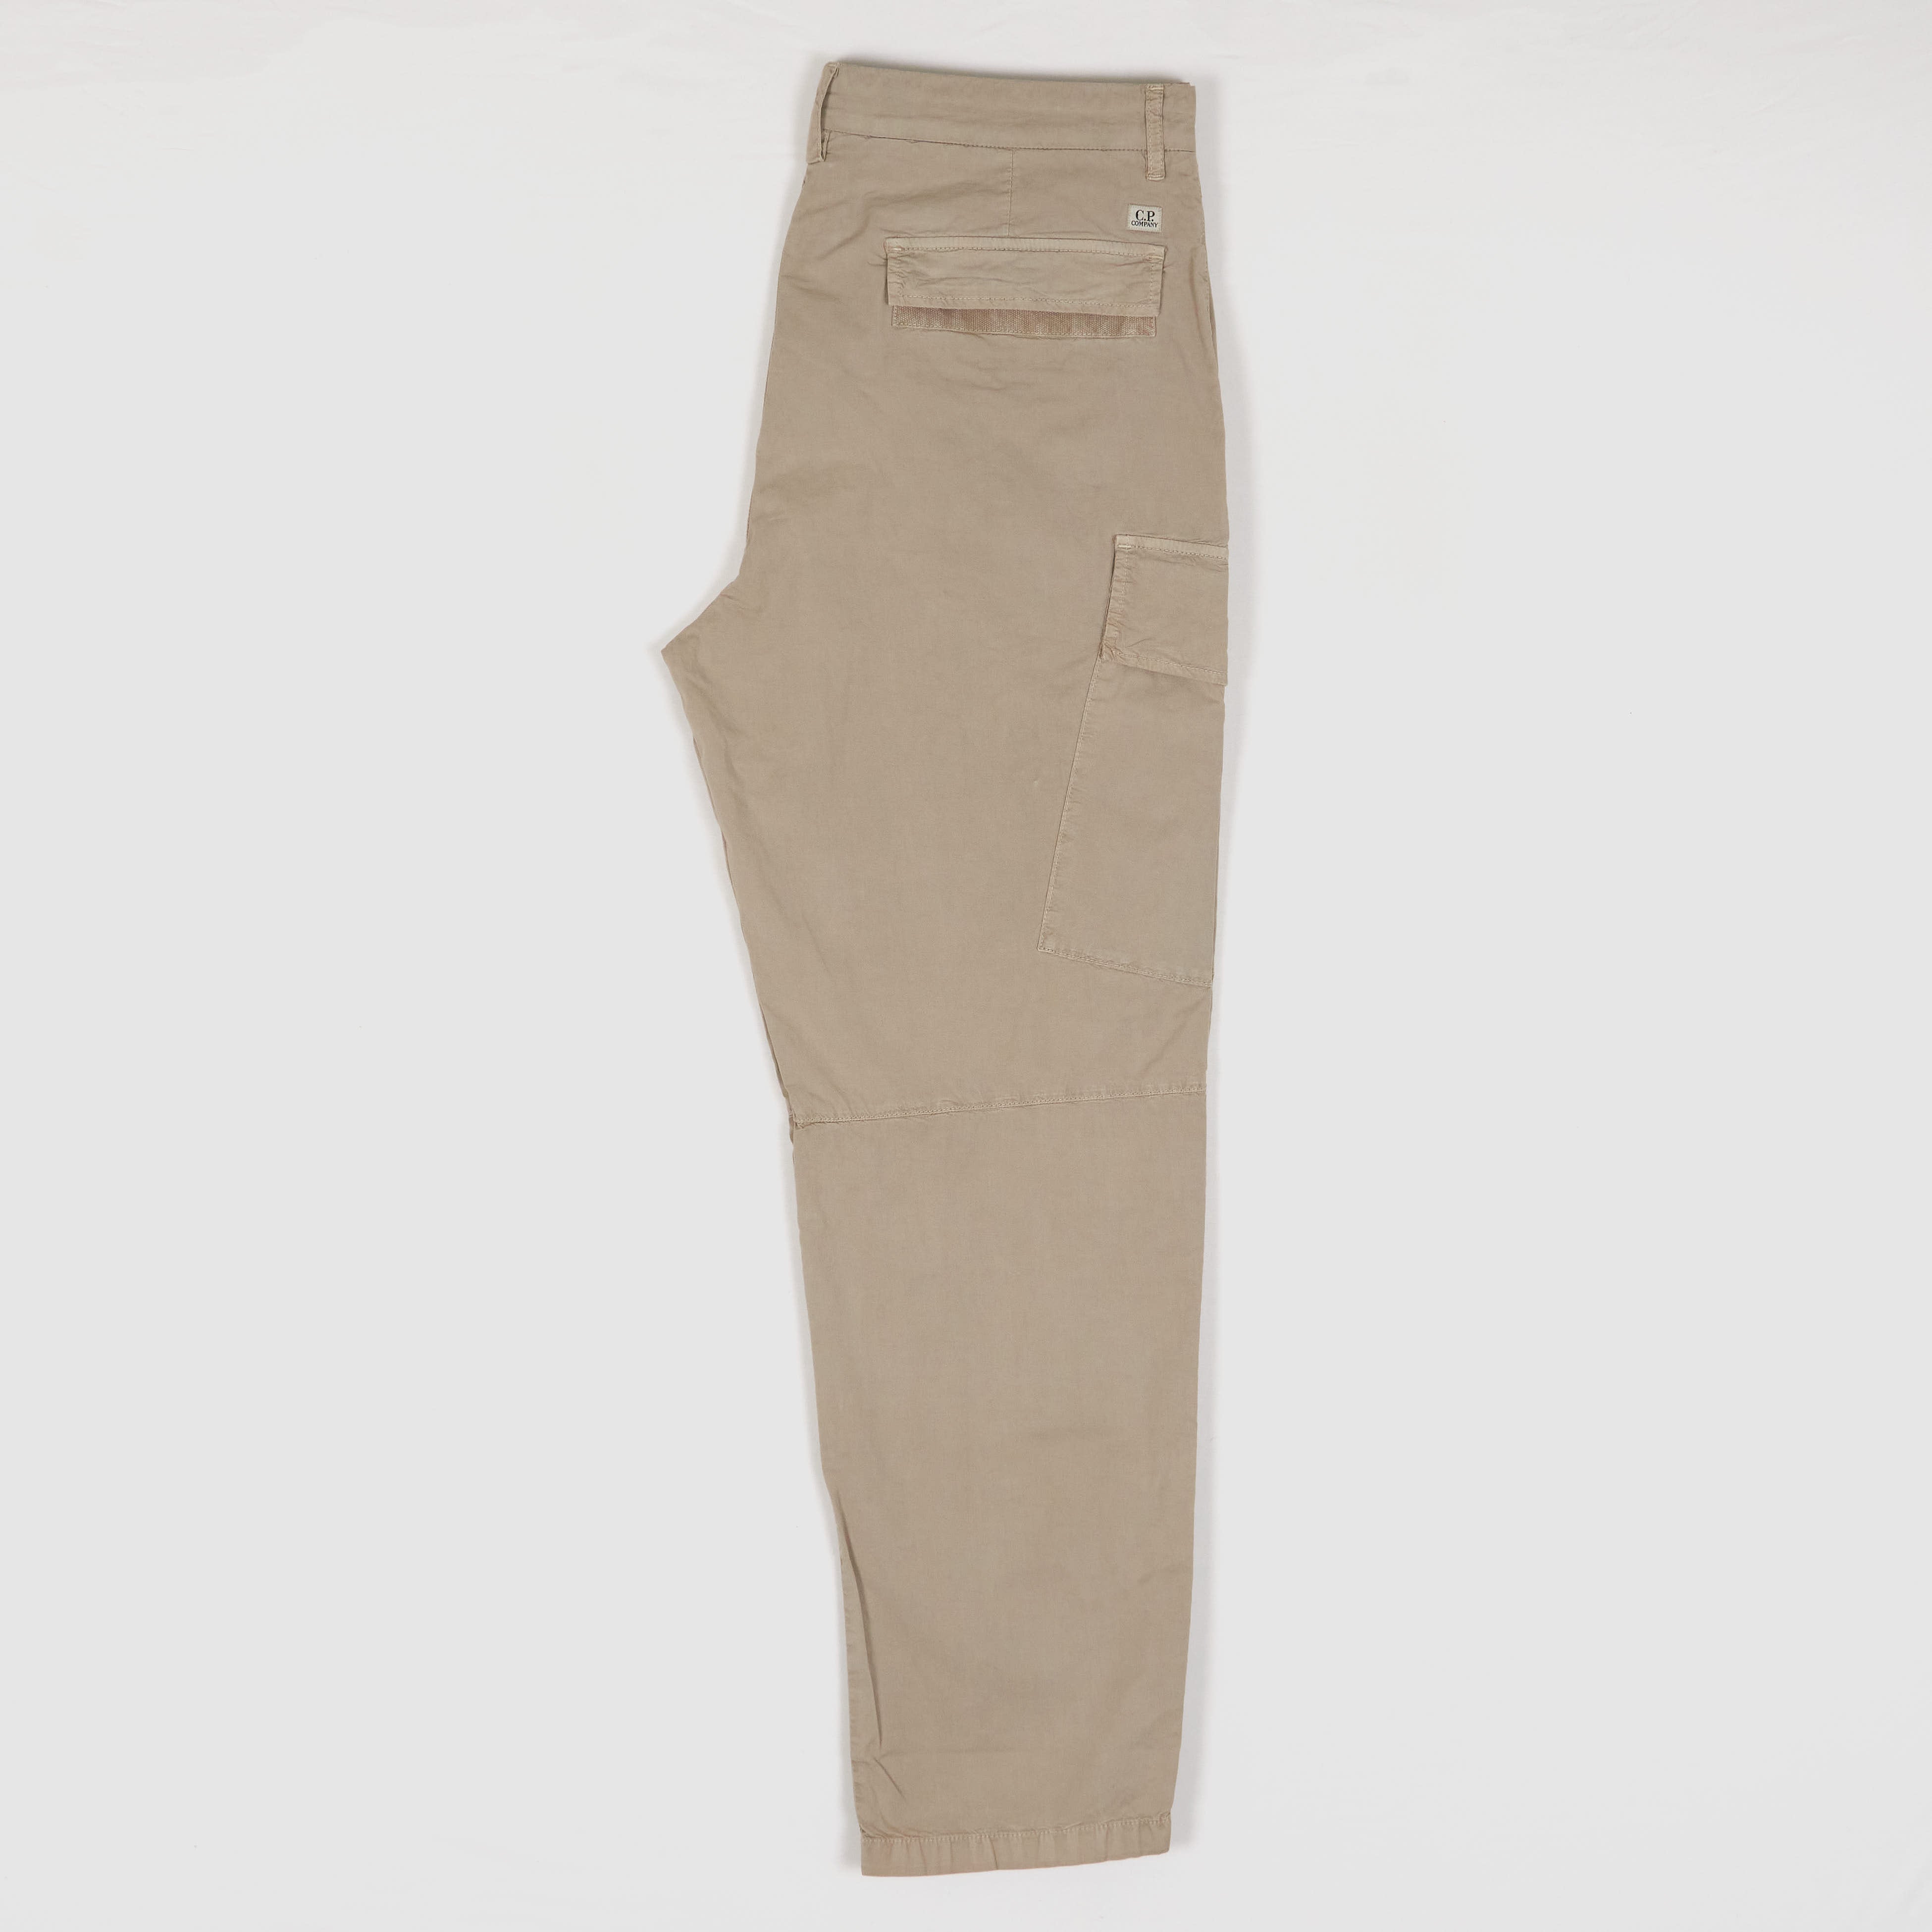 Black cotton twill cargo pants, multi-pocket, slim fit, Gado Nirvana